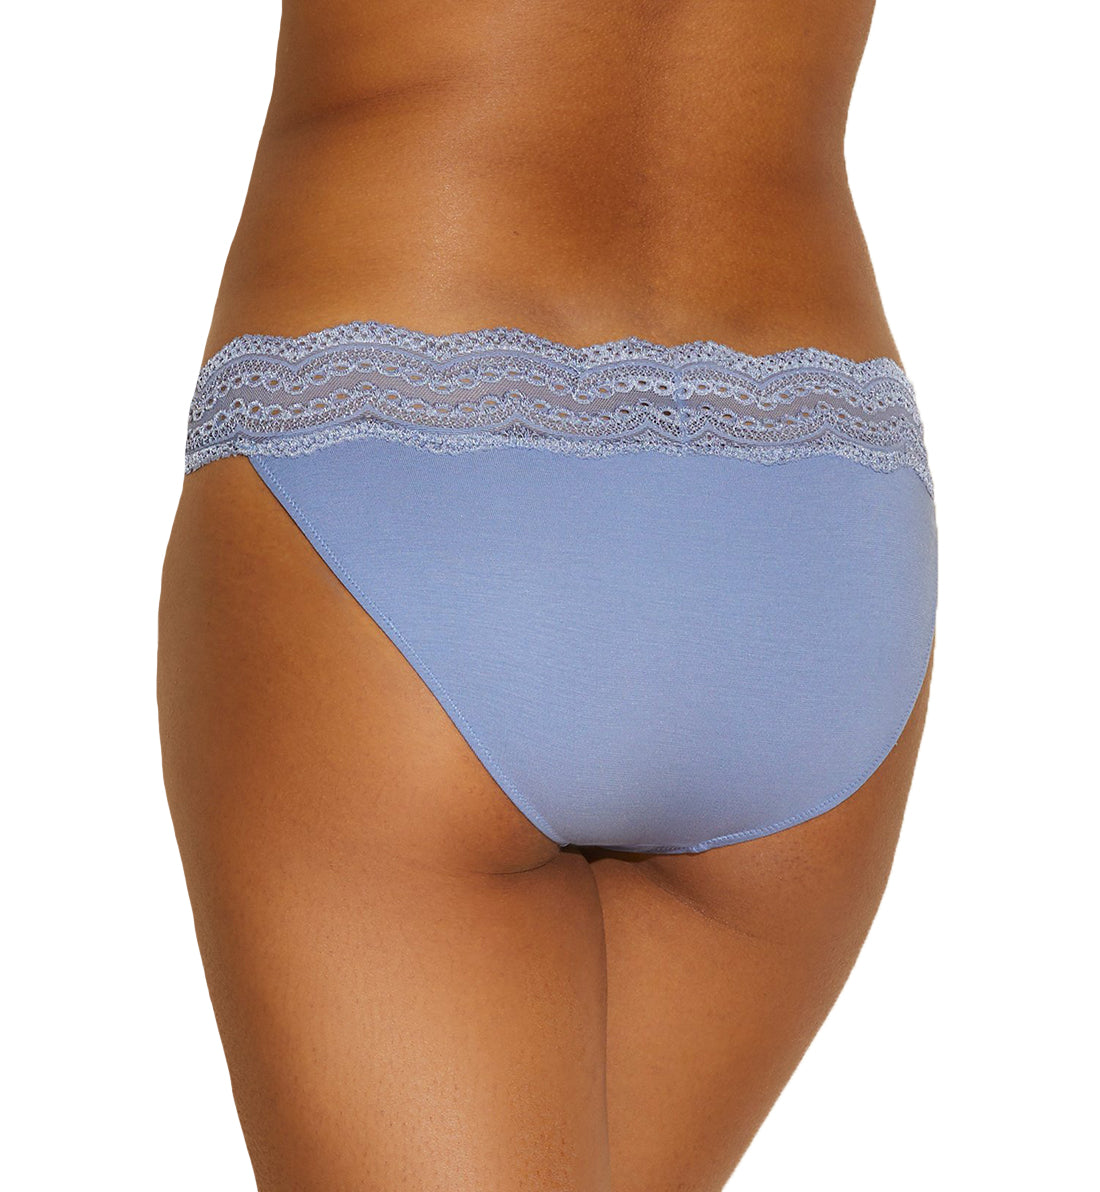 Cosabella Ceylon Modal Bikini (CEYMD0521),Small,Blue Diamond - Blue Diamond,Small